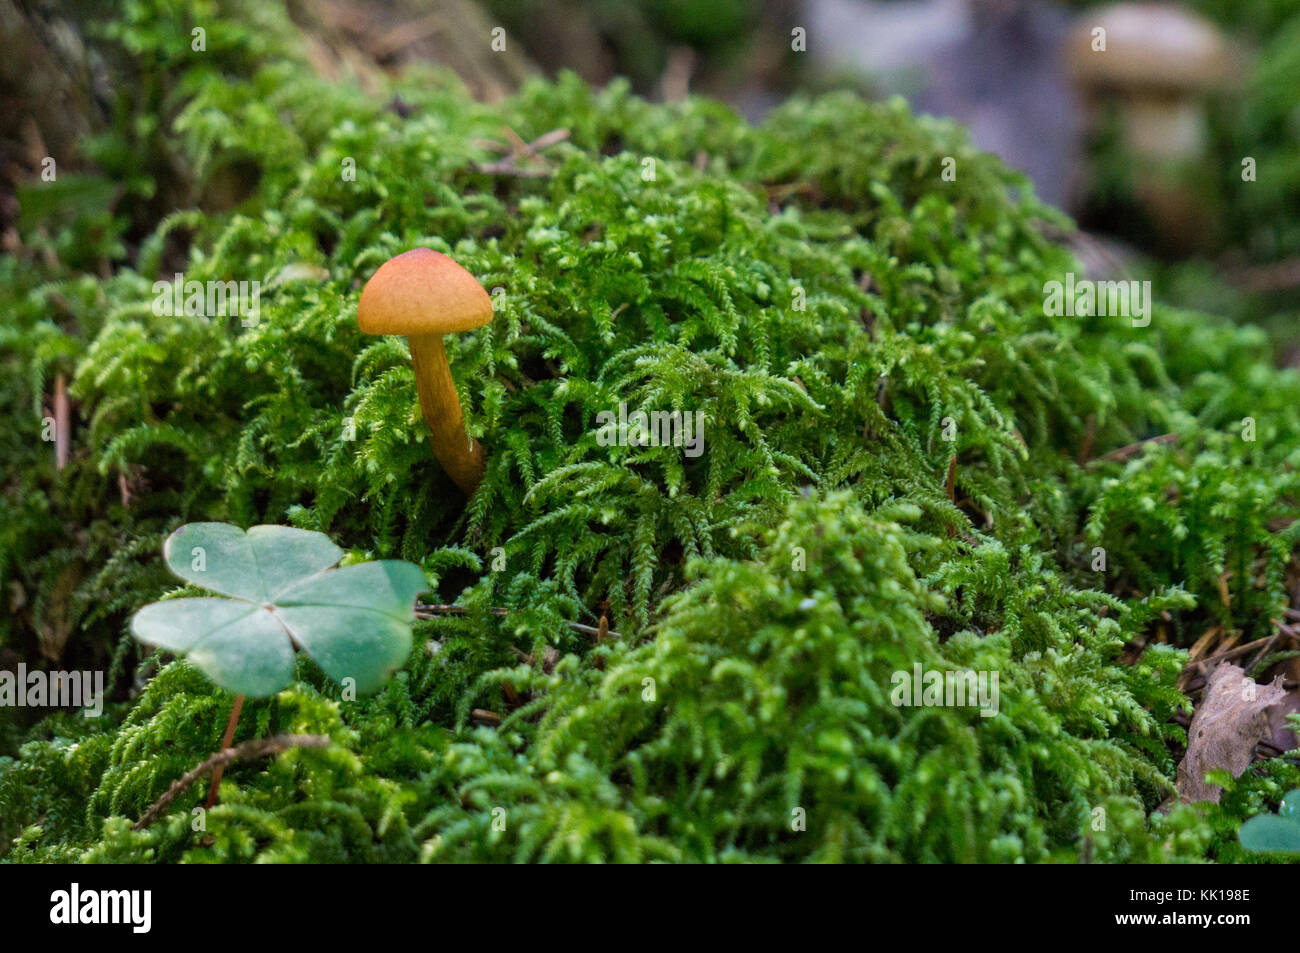 Tiny mushroom and clover growing amid moss Stock Photo